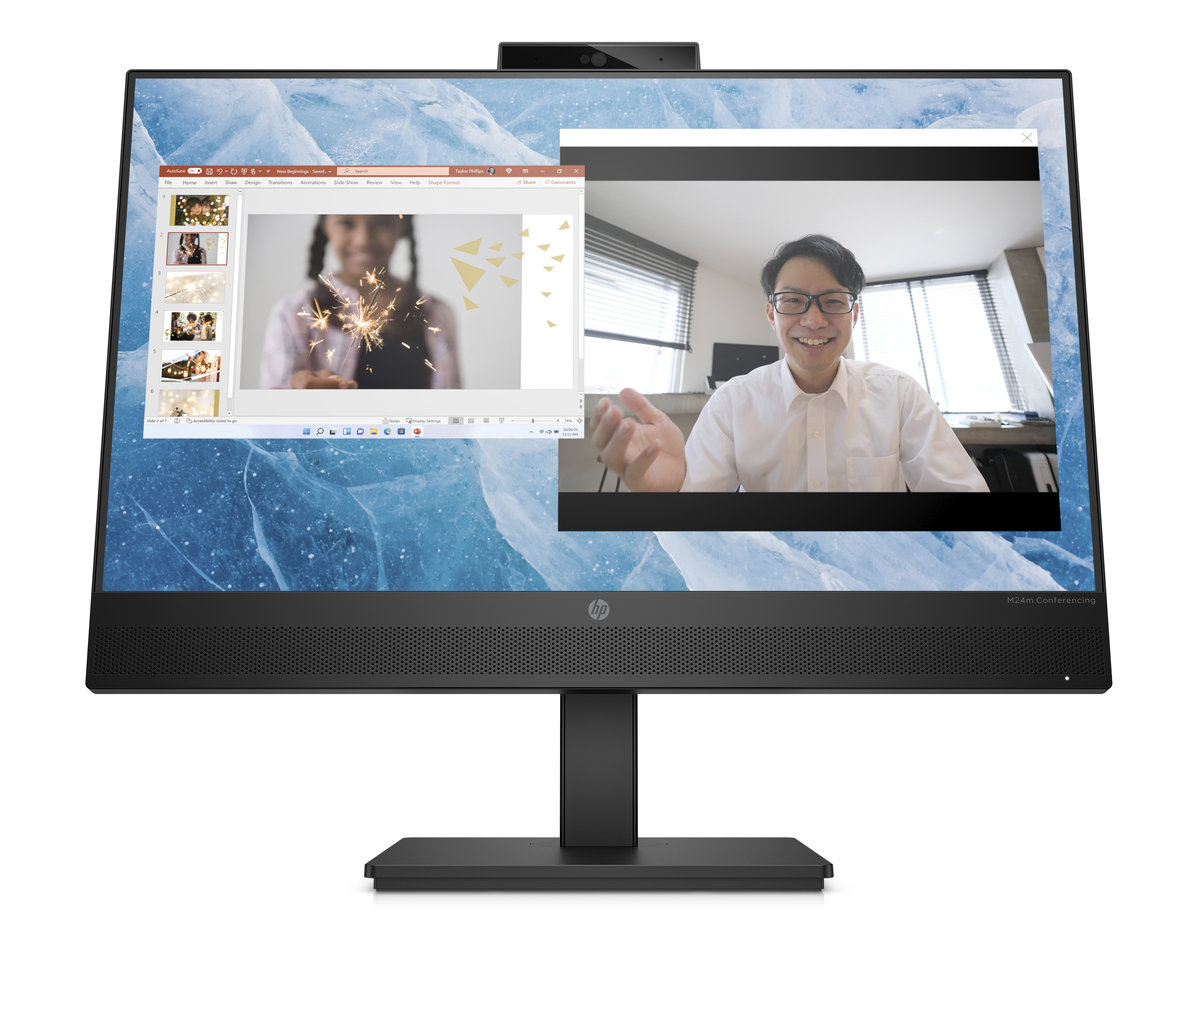 HP M24m Conferencing Monitor (678U5AA)